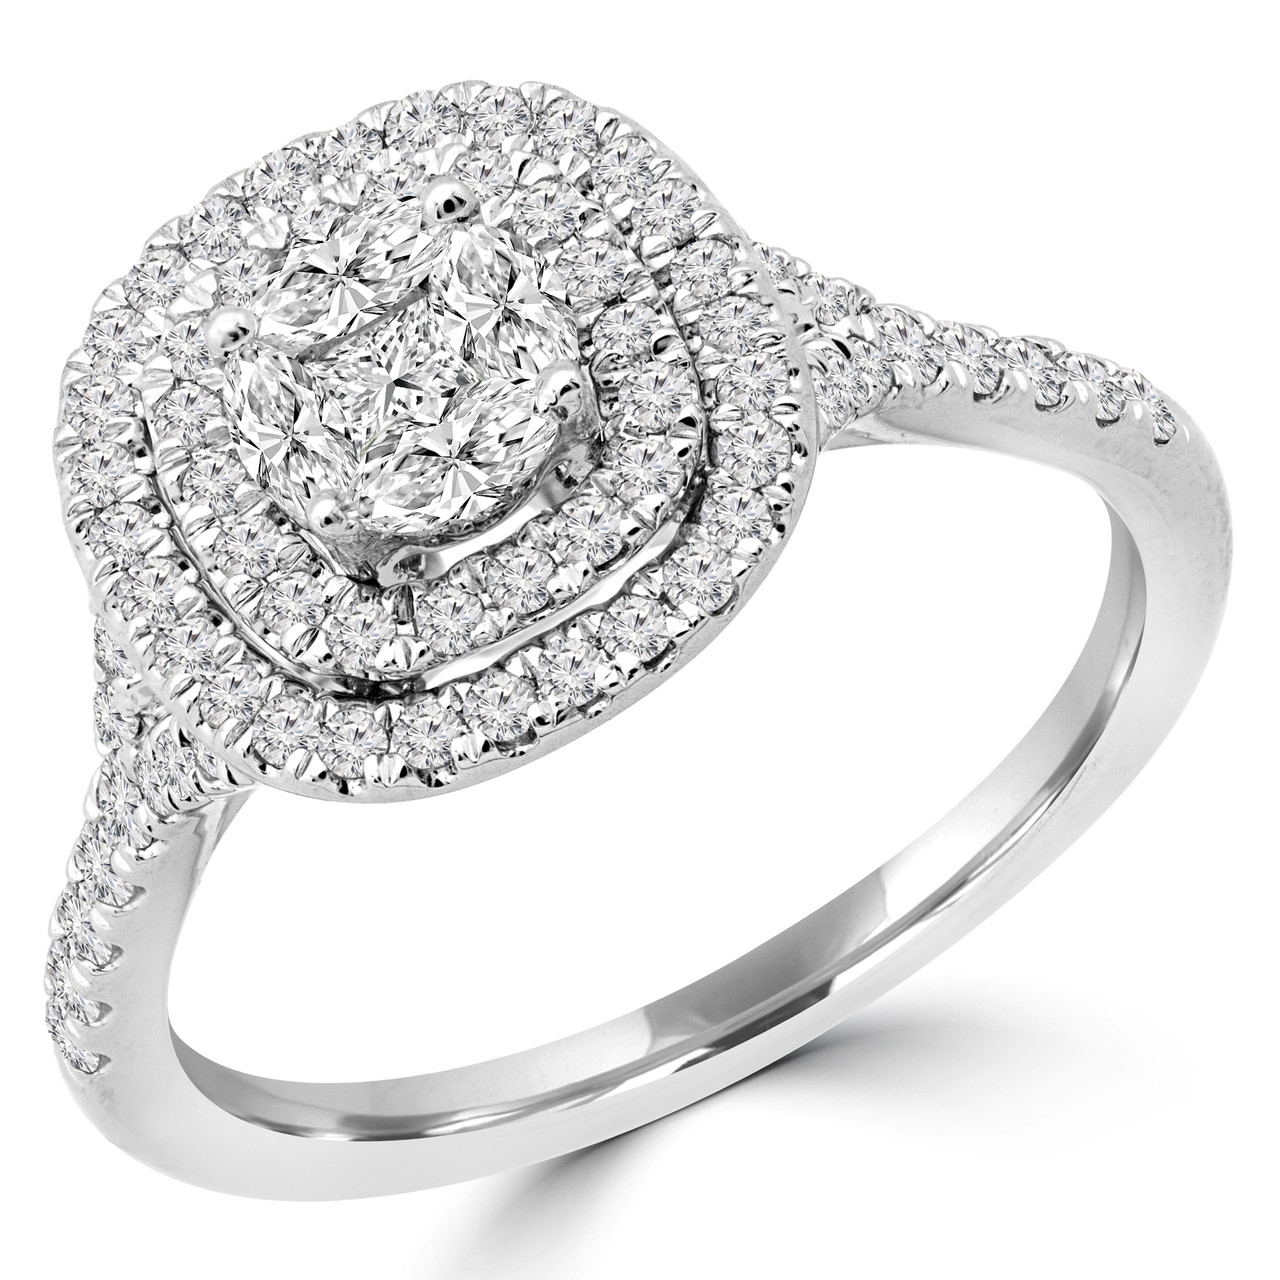 P3 POMPEII3 1ct Princess Cut Diamond Double Halo Engagement Ring 14K White  Gold - Size 4 | Amazon.com